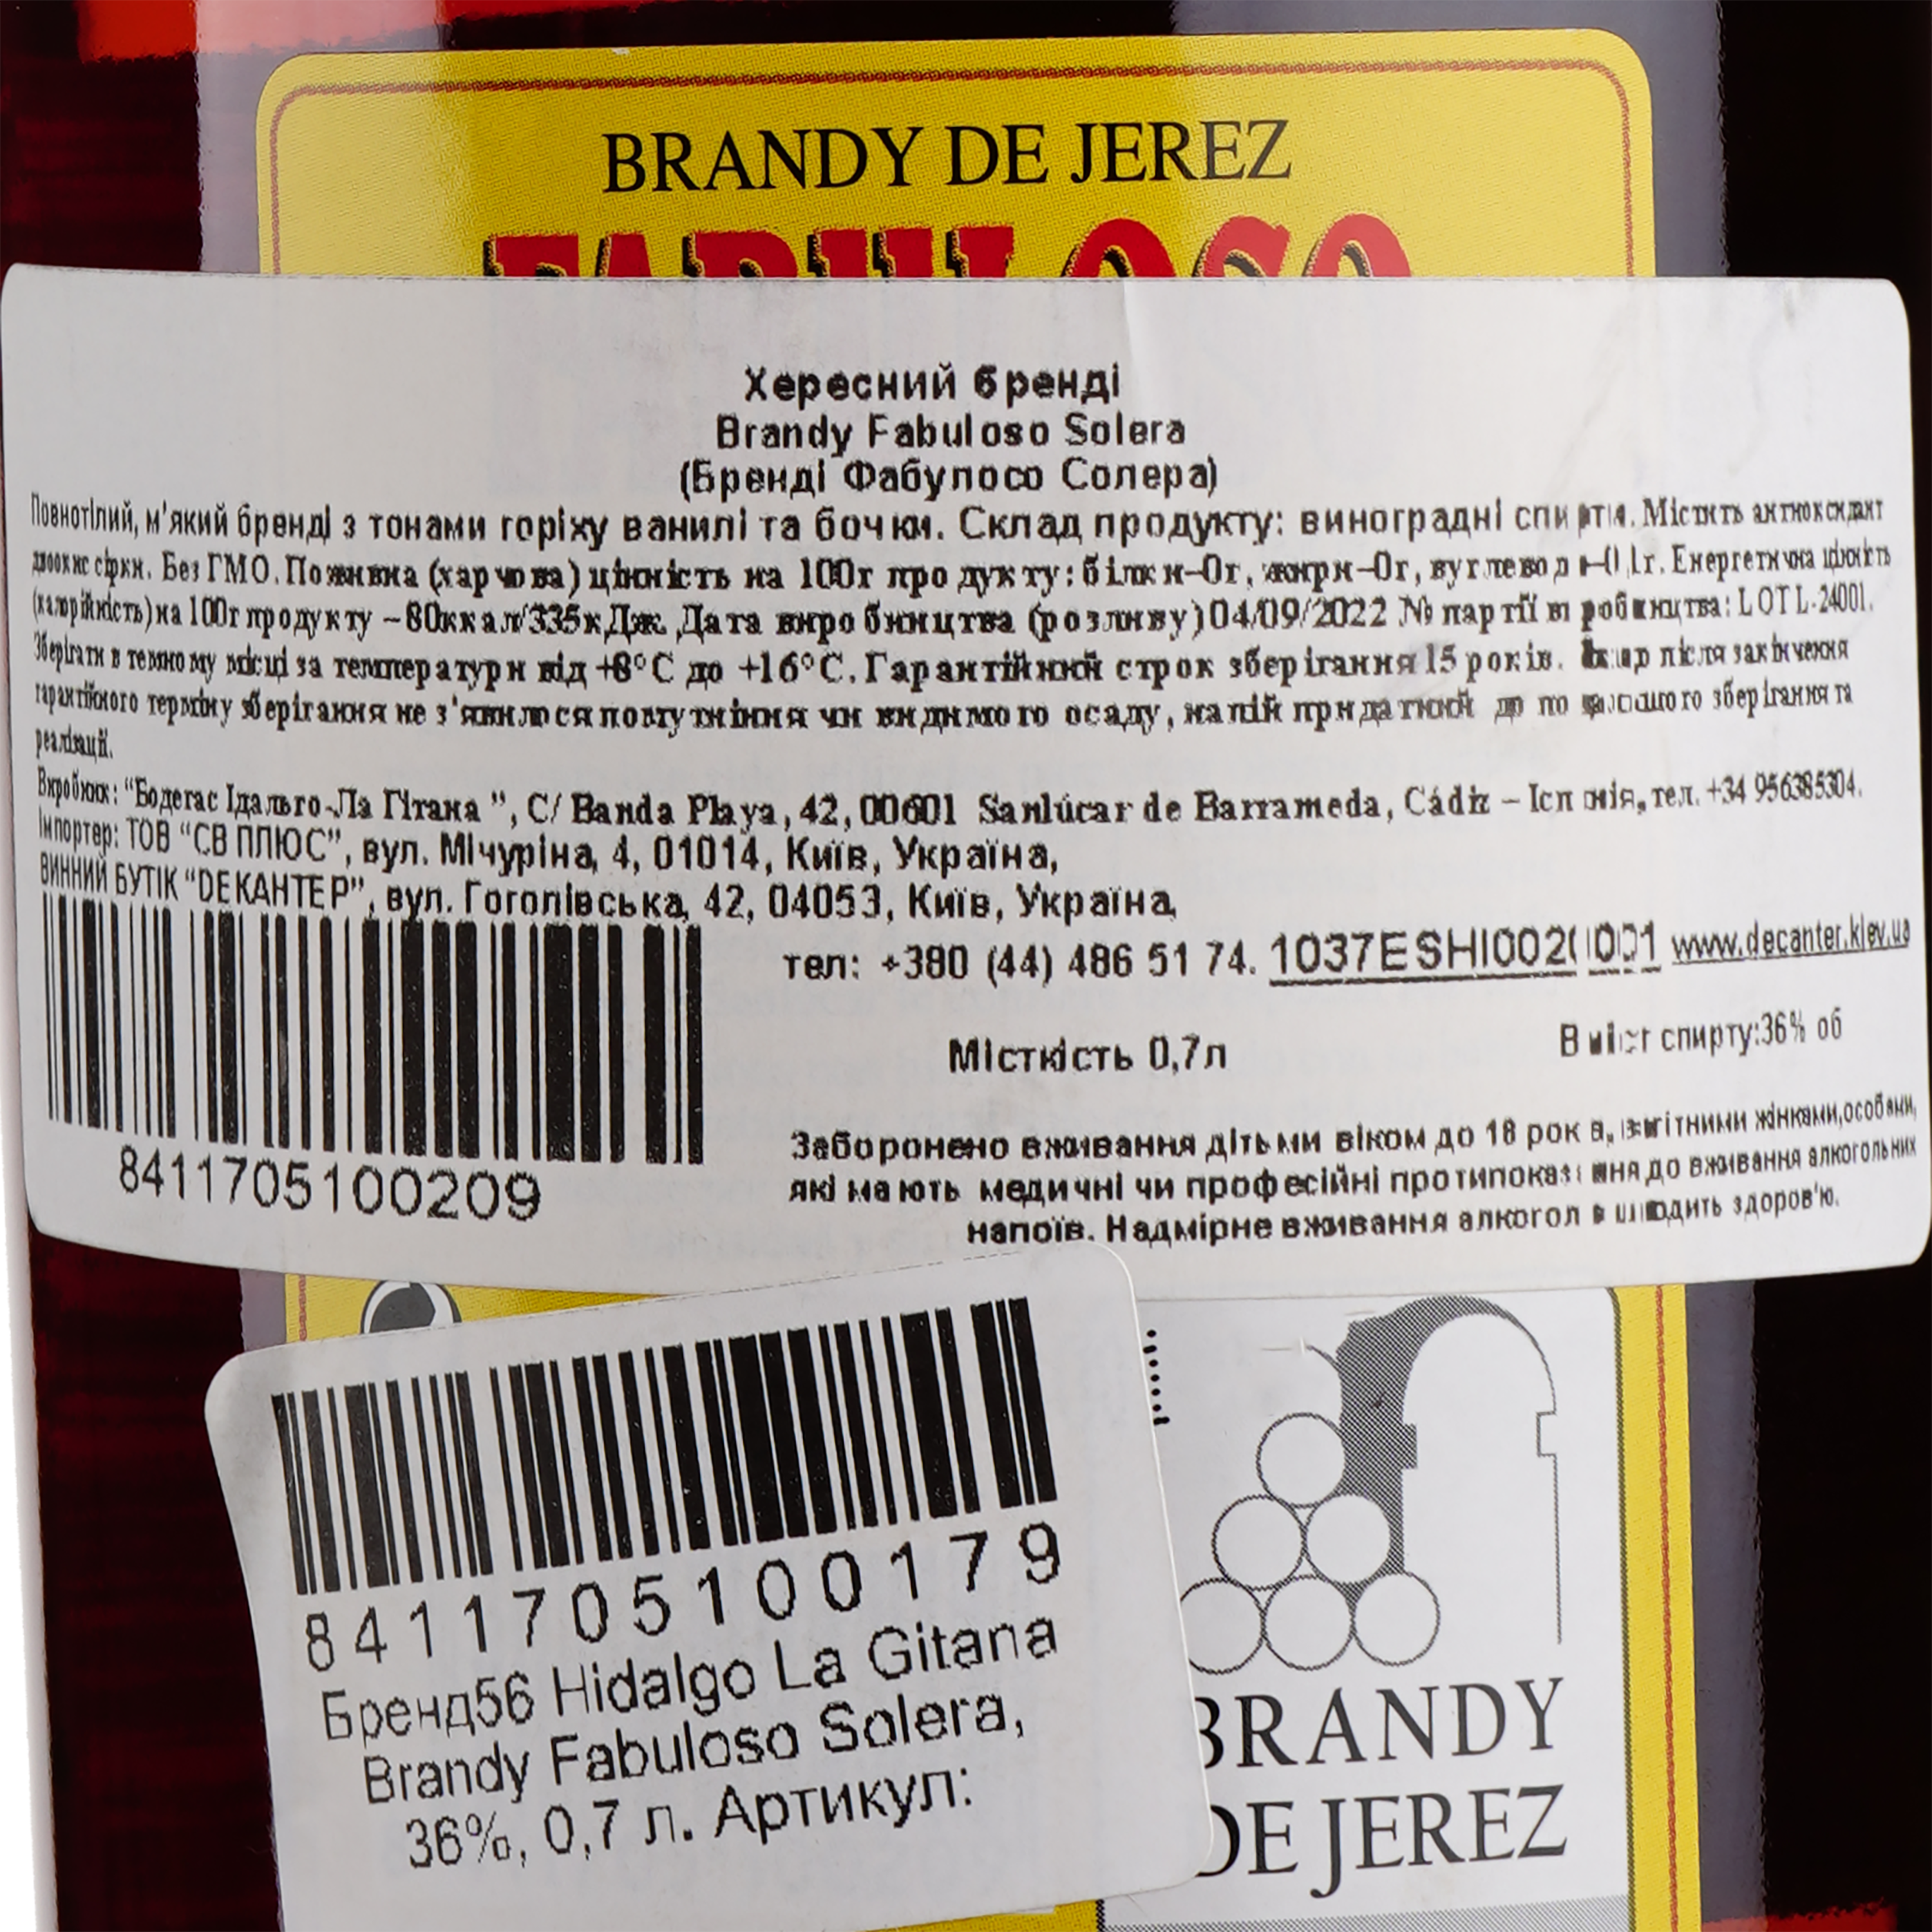 Бренди Hidalgo La Gitana Brandy Fabuloso Solera, 36%, 0,7 л - фото 3